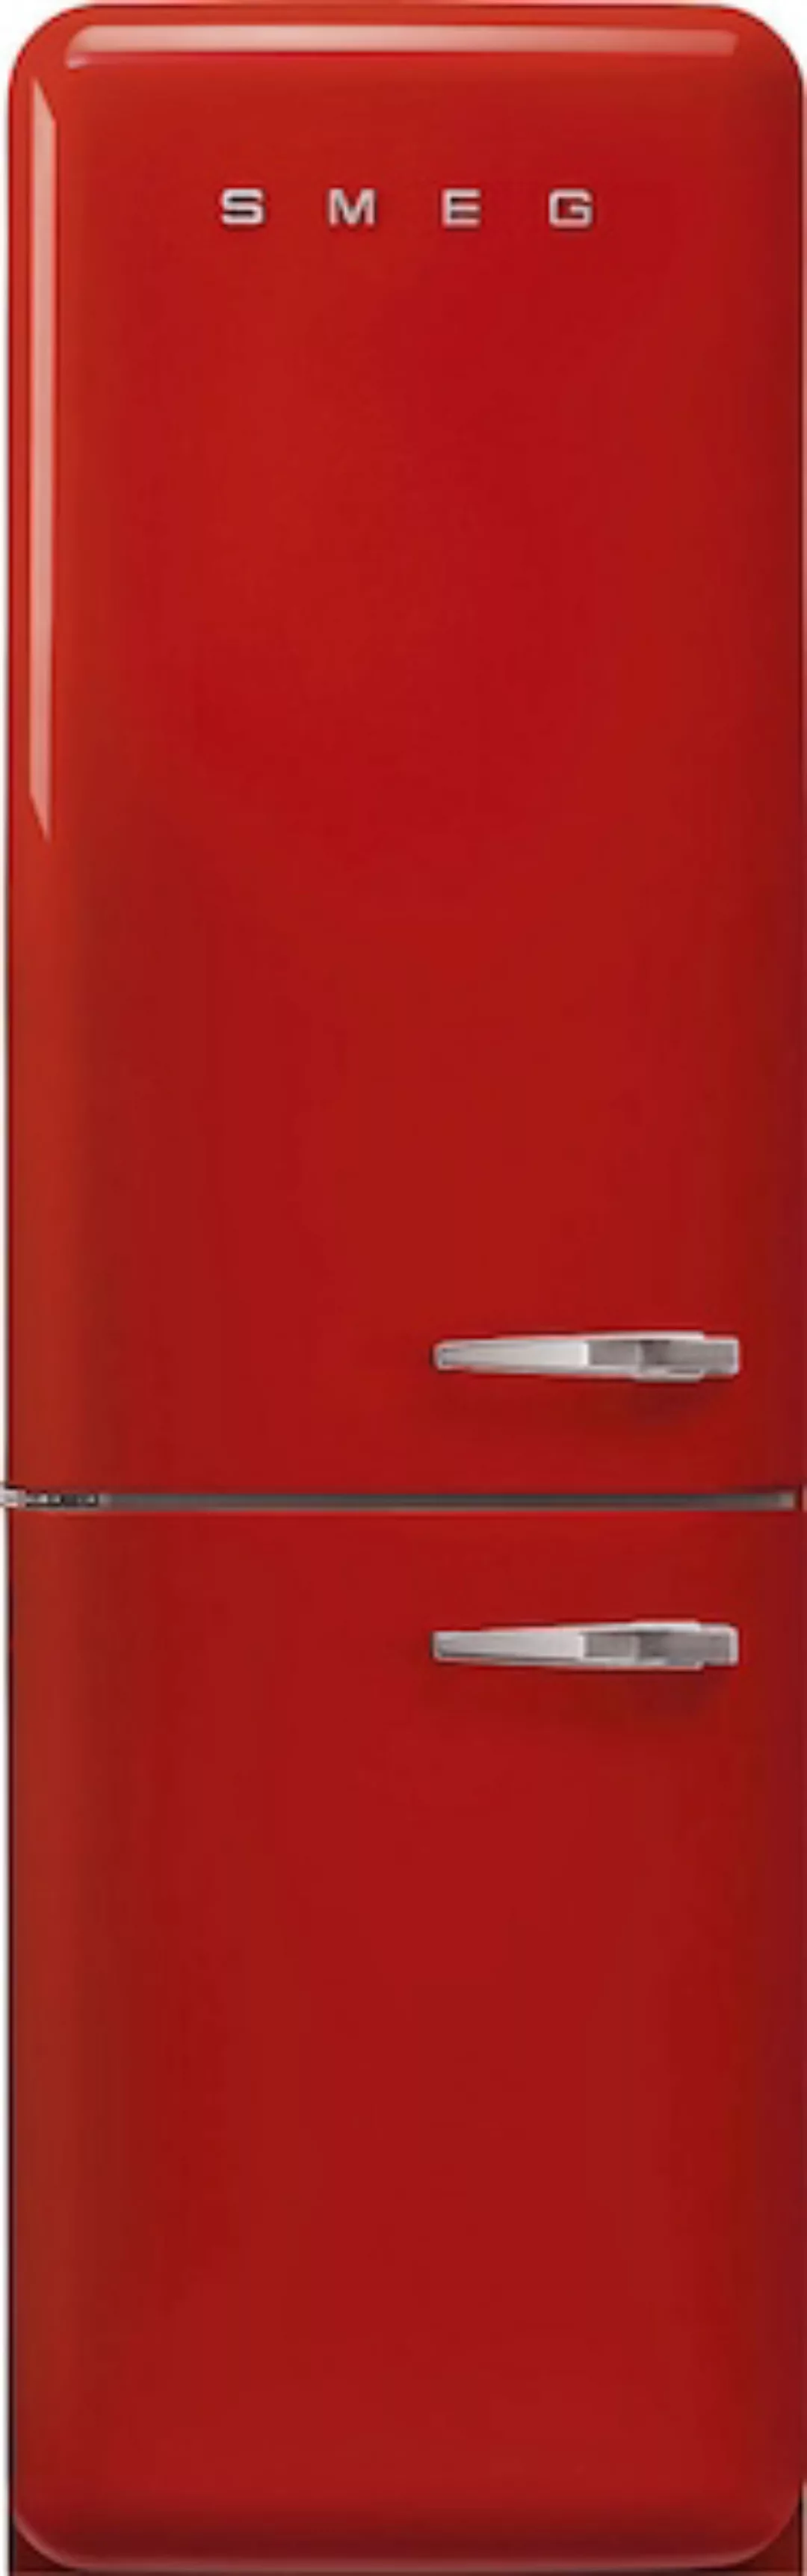 Smeg - FAB32 Kühl-/Gefrierkombination - rot/lackiert/Türnanschlag links/BxH günstig online kaufen